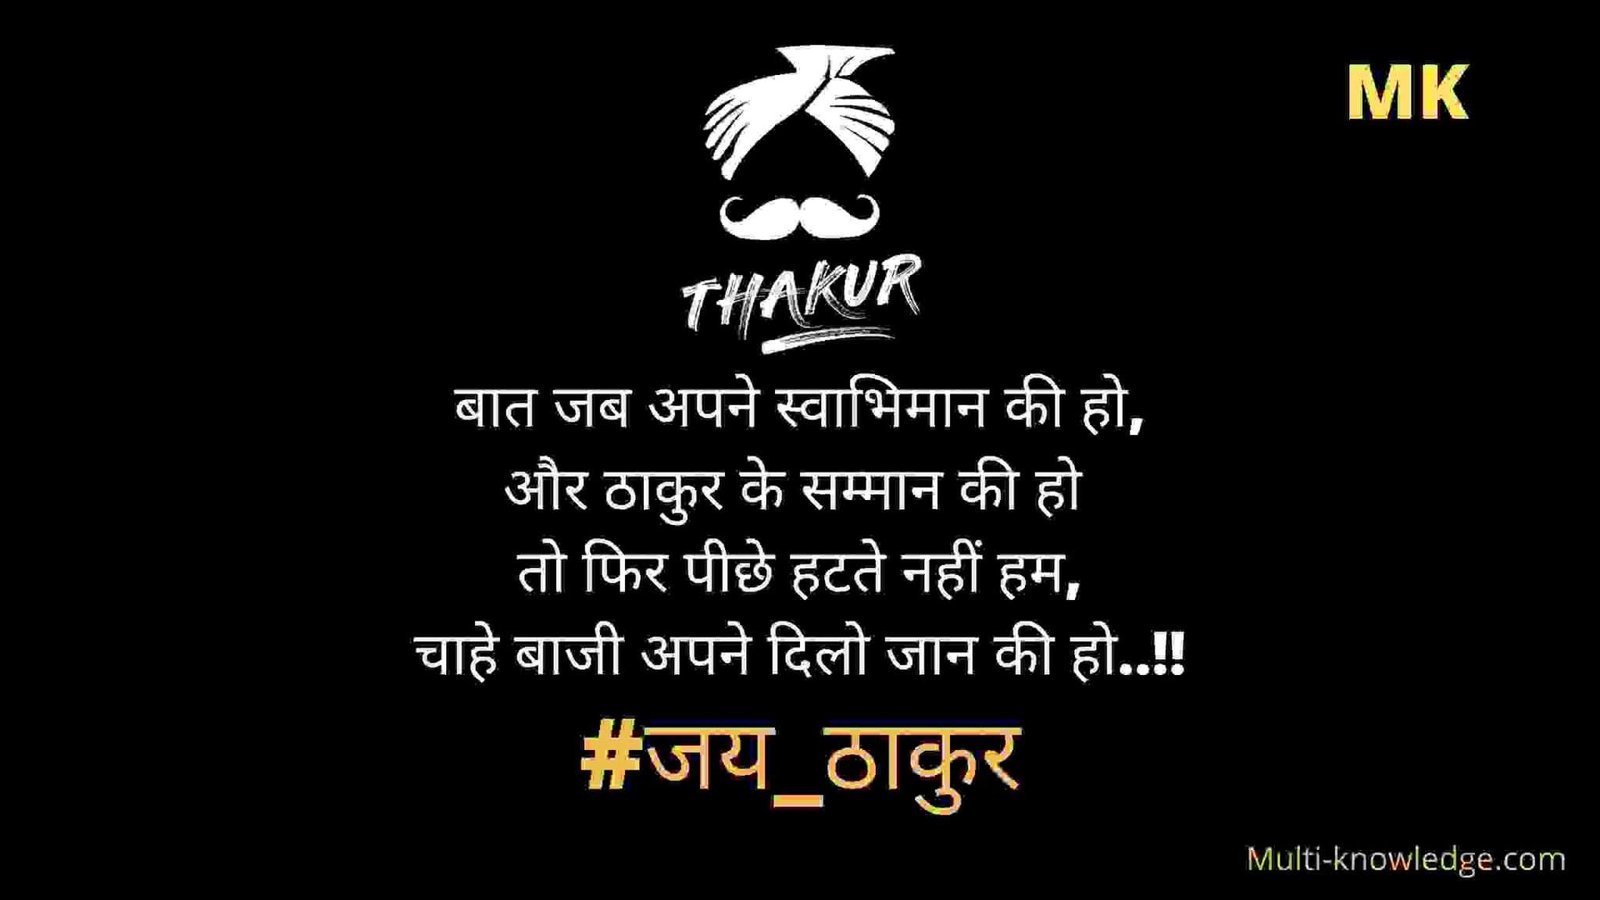 Best whatapp Thakur Attitude Status in Hindi by multi-knowledge.com